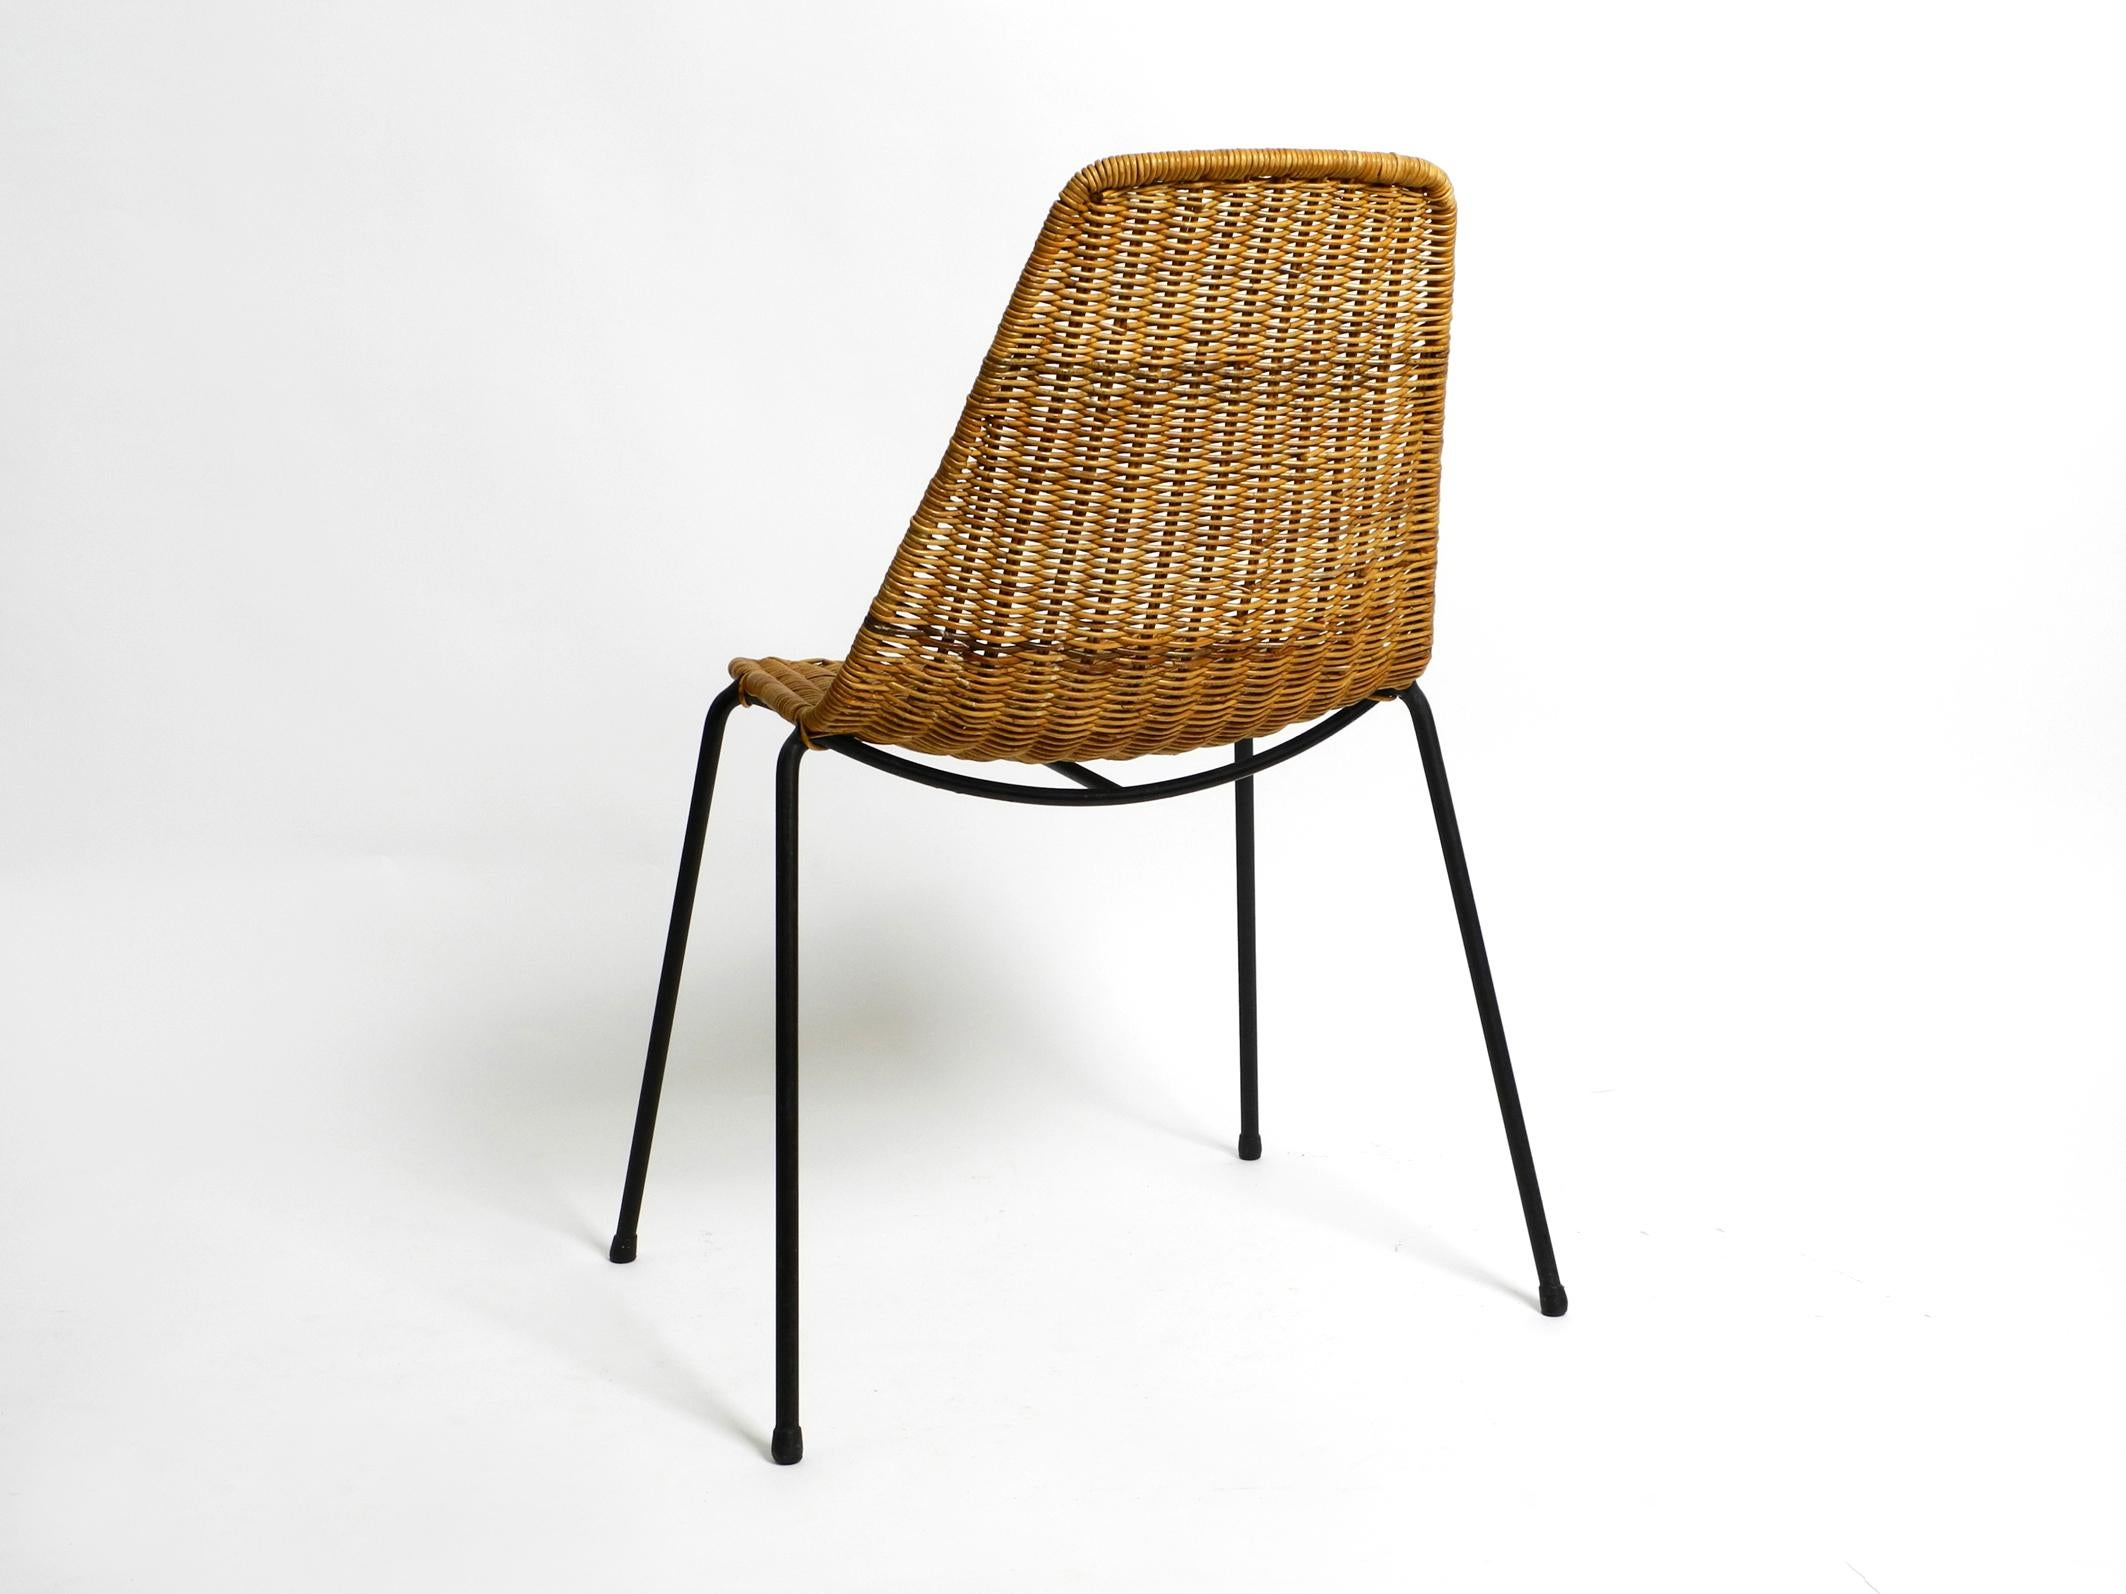 Mid-20th Century Original Italian Mid-Century Modern Gian Franco Legler Basket Chair For Sale